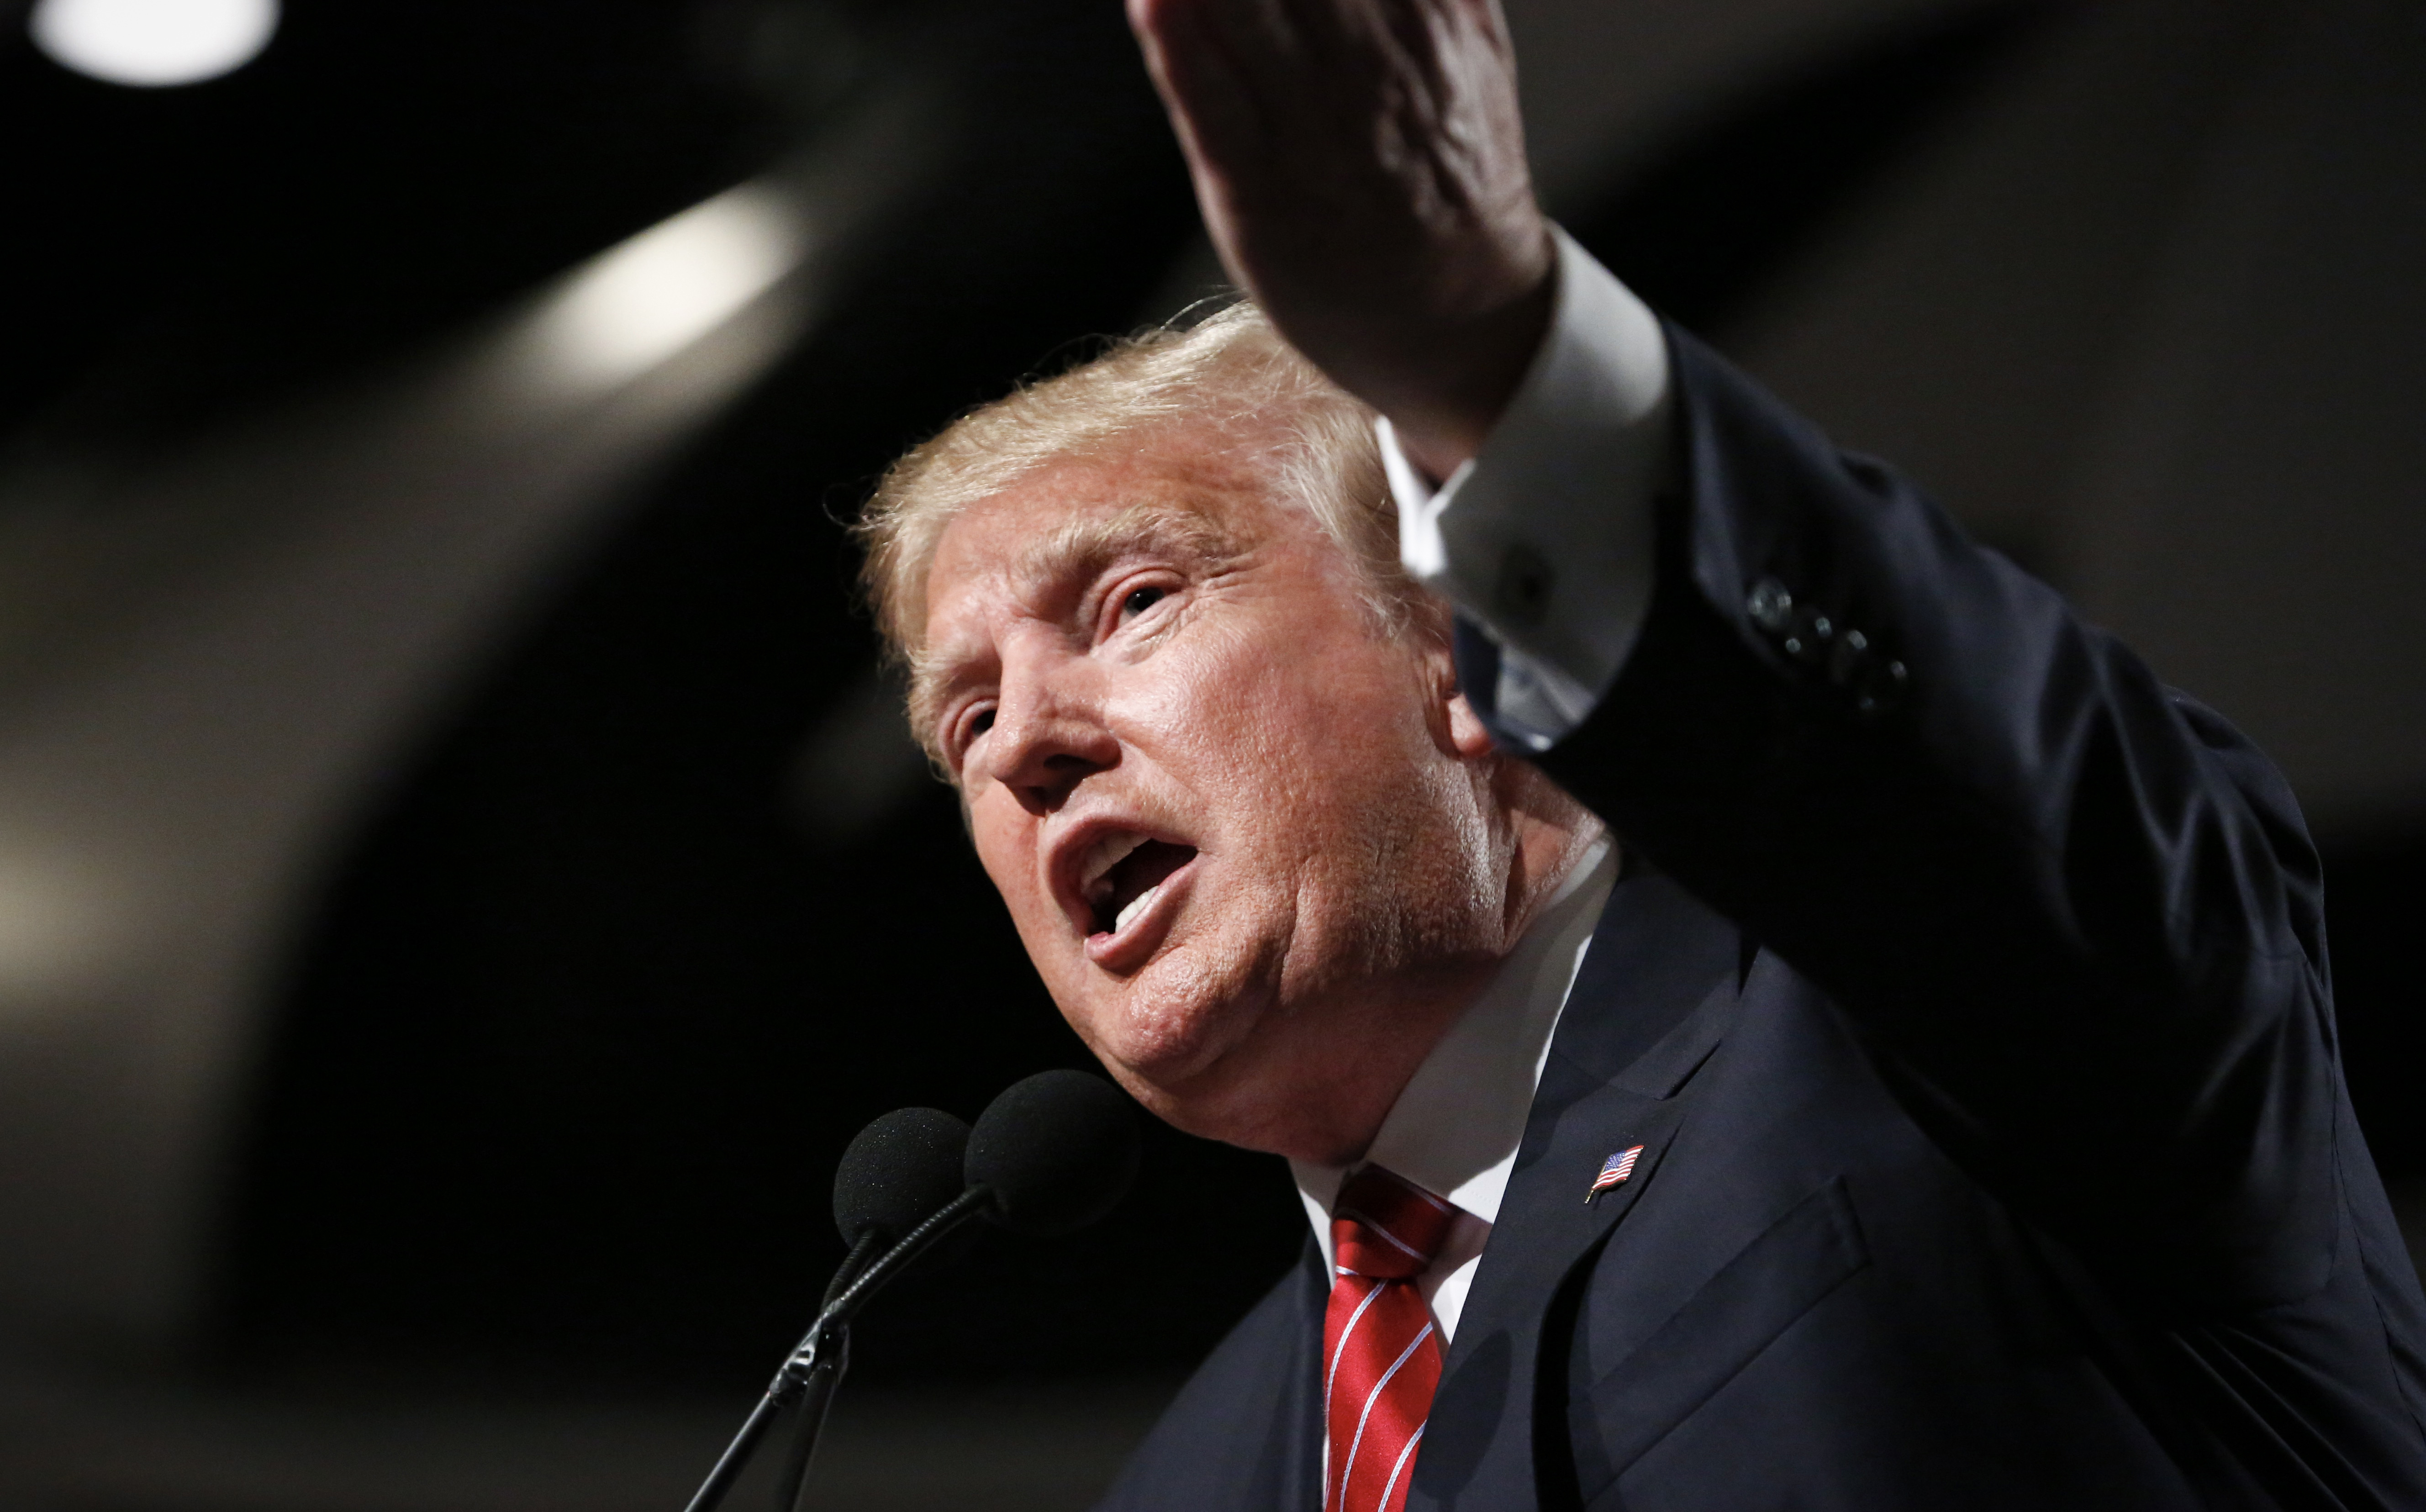 Republican presidential candidate Donald Trump speaks during a 2015 campaign event in Phoenix. (CNS/Nancy Wiechec)